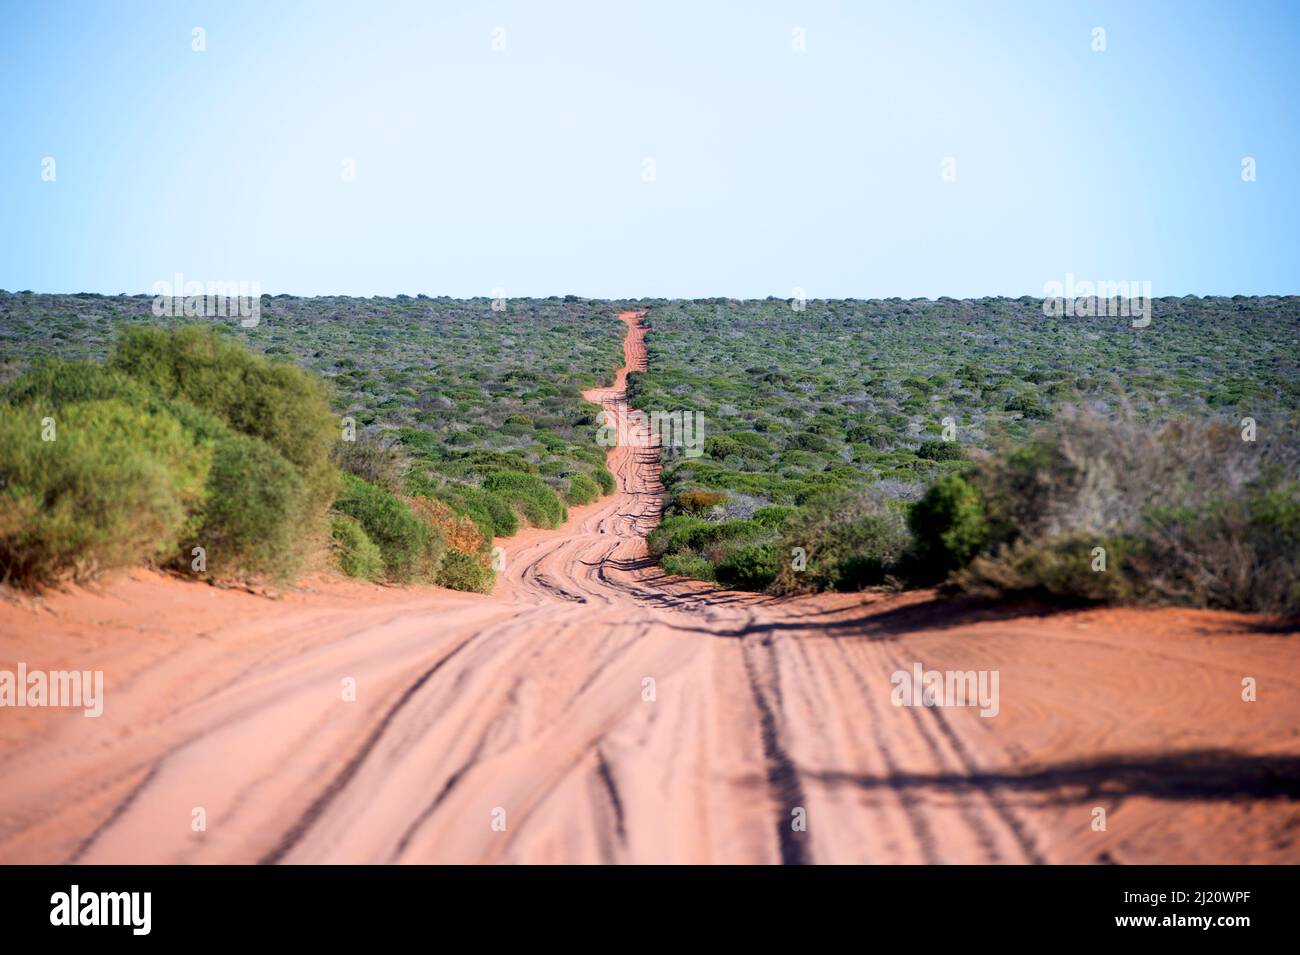 Dirt road through shrubland. Francois Peron National Park, Shark Bay, Western Australia. October 2019. Stock Photo